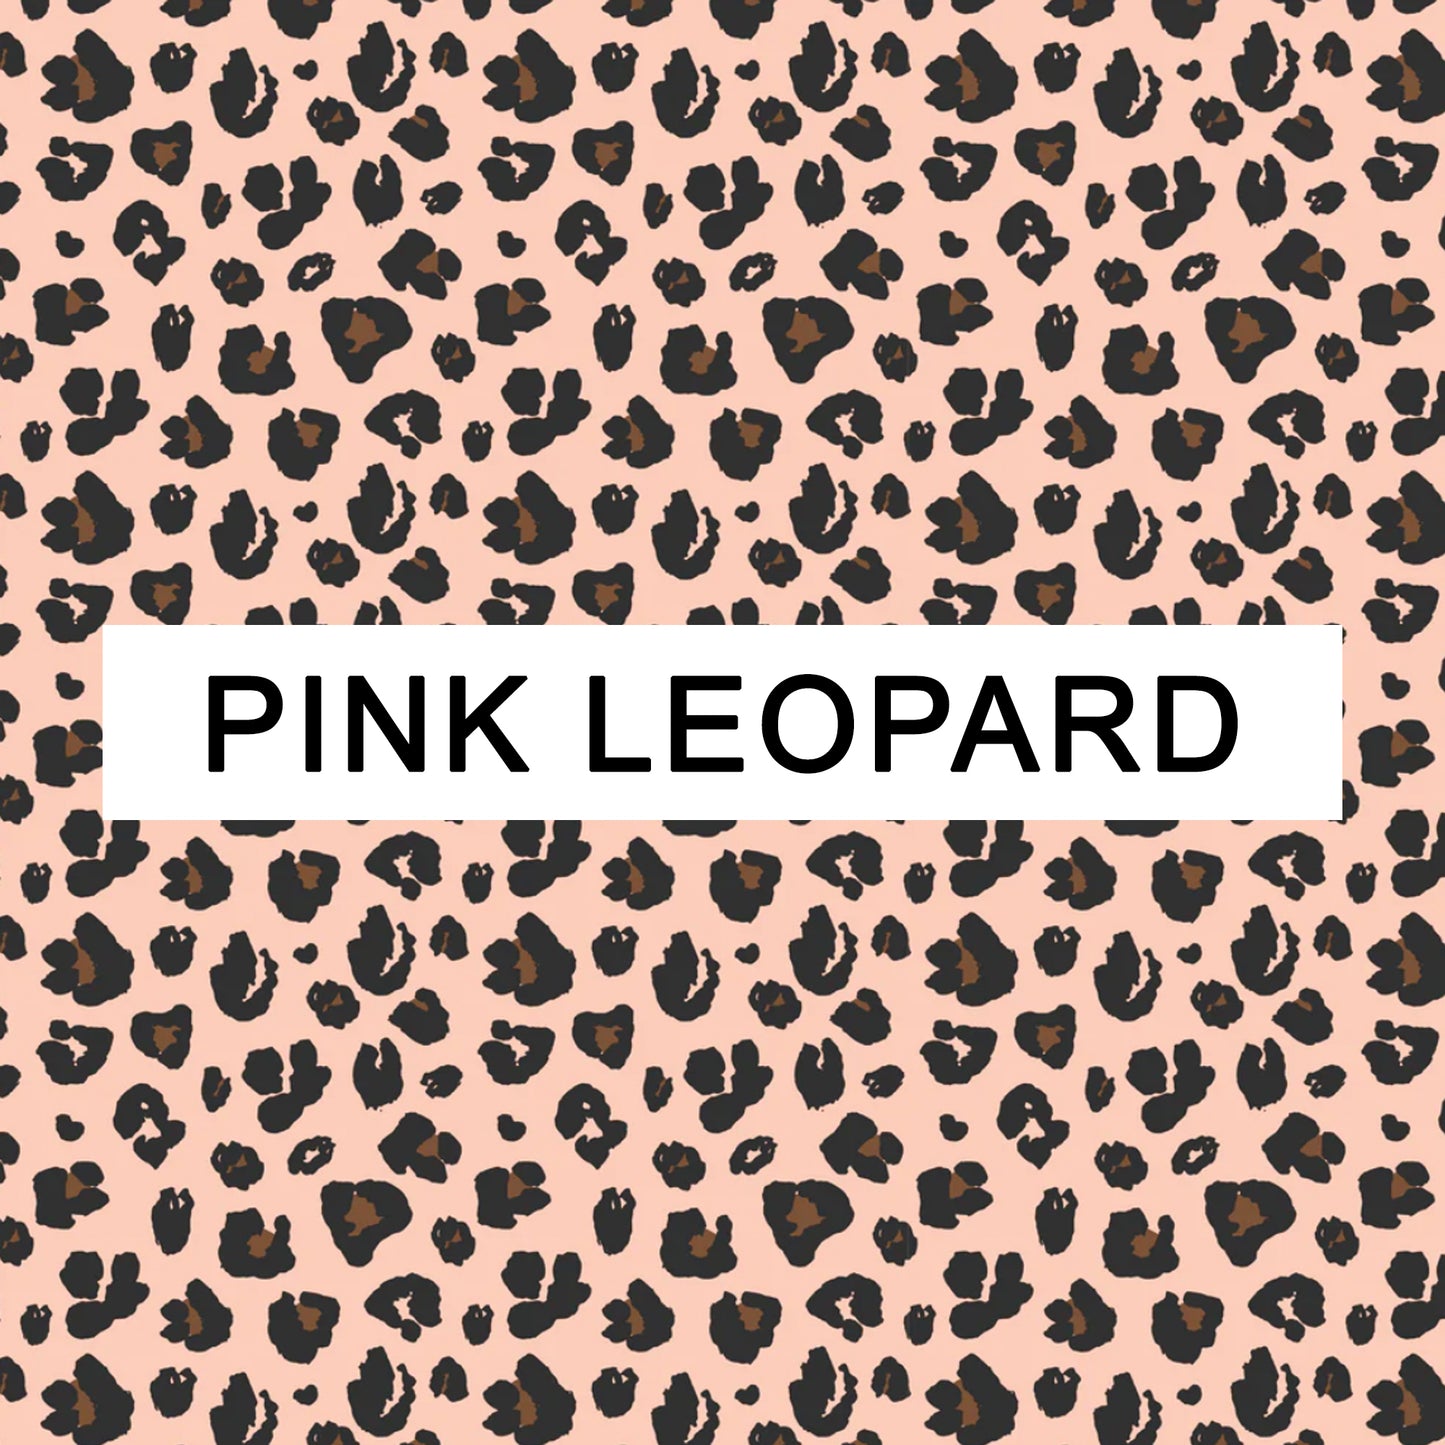 Pink Lepoard - Birth Counter